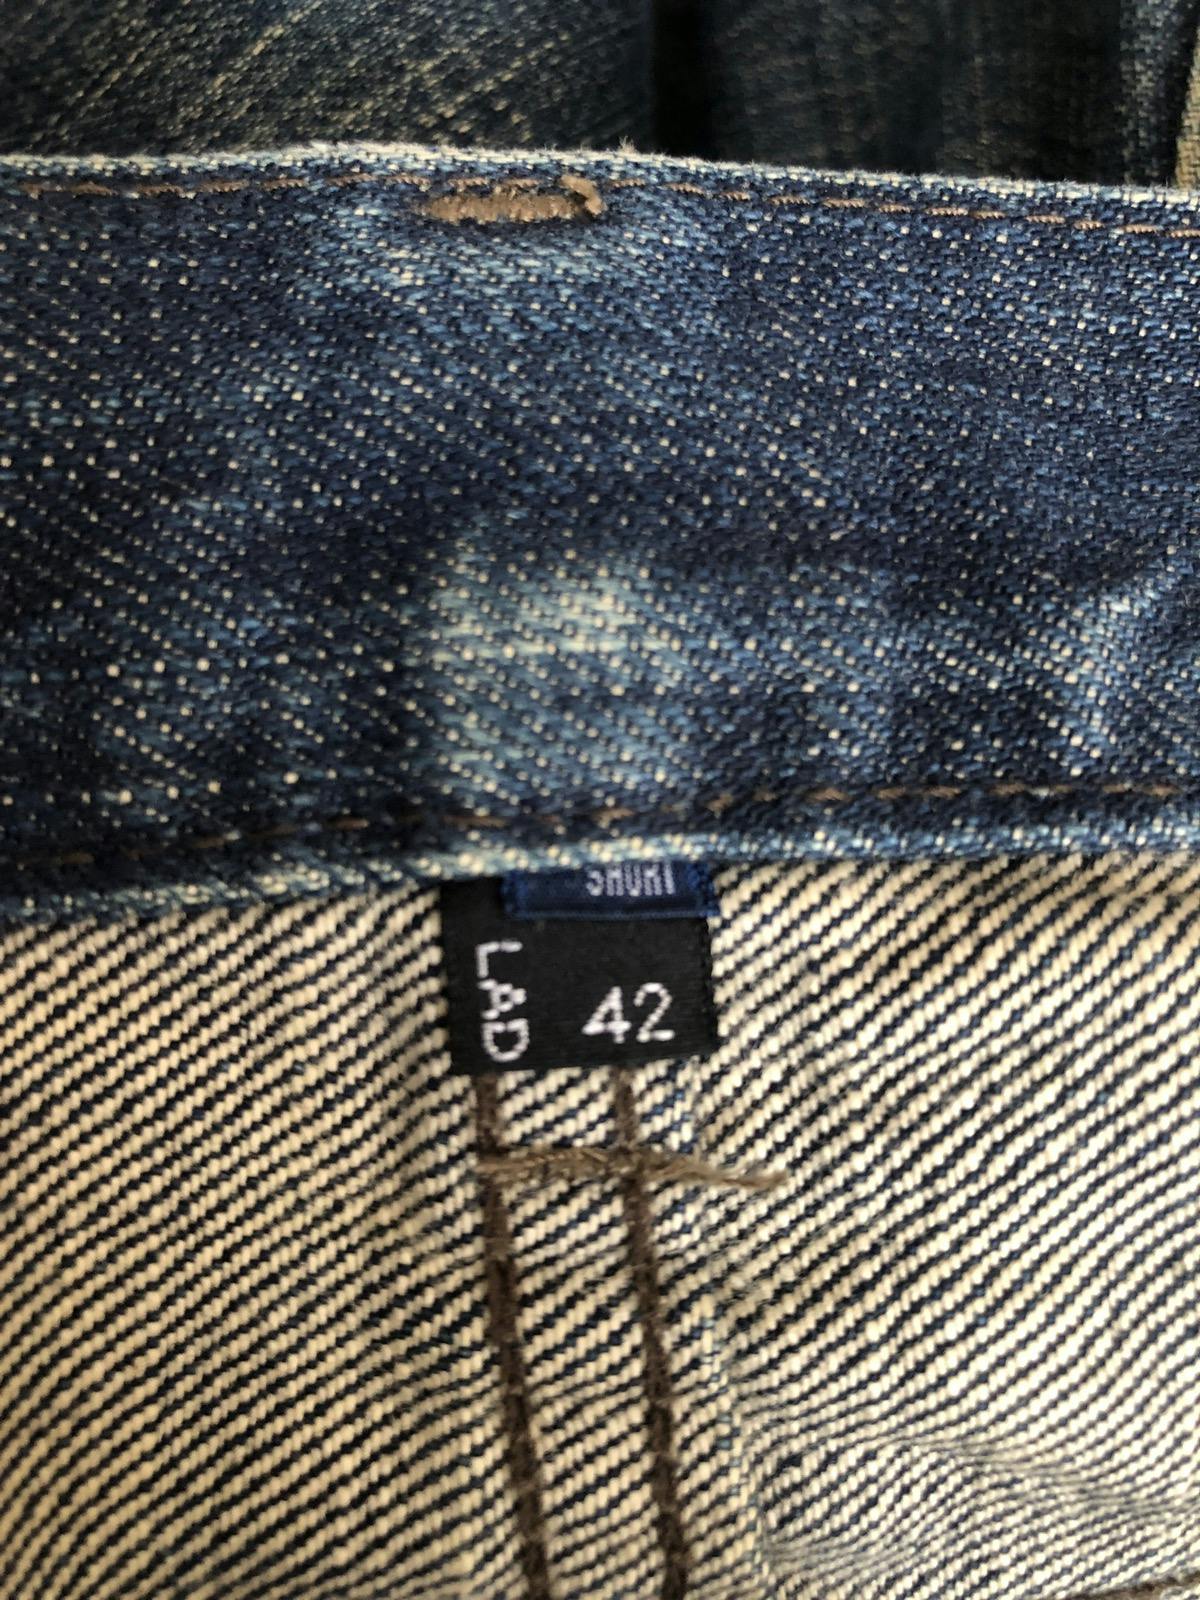 LAD MUSICIAN Denim Pants Jeans Wear 42 Japan Made - 10